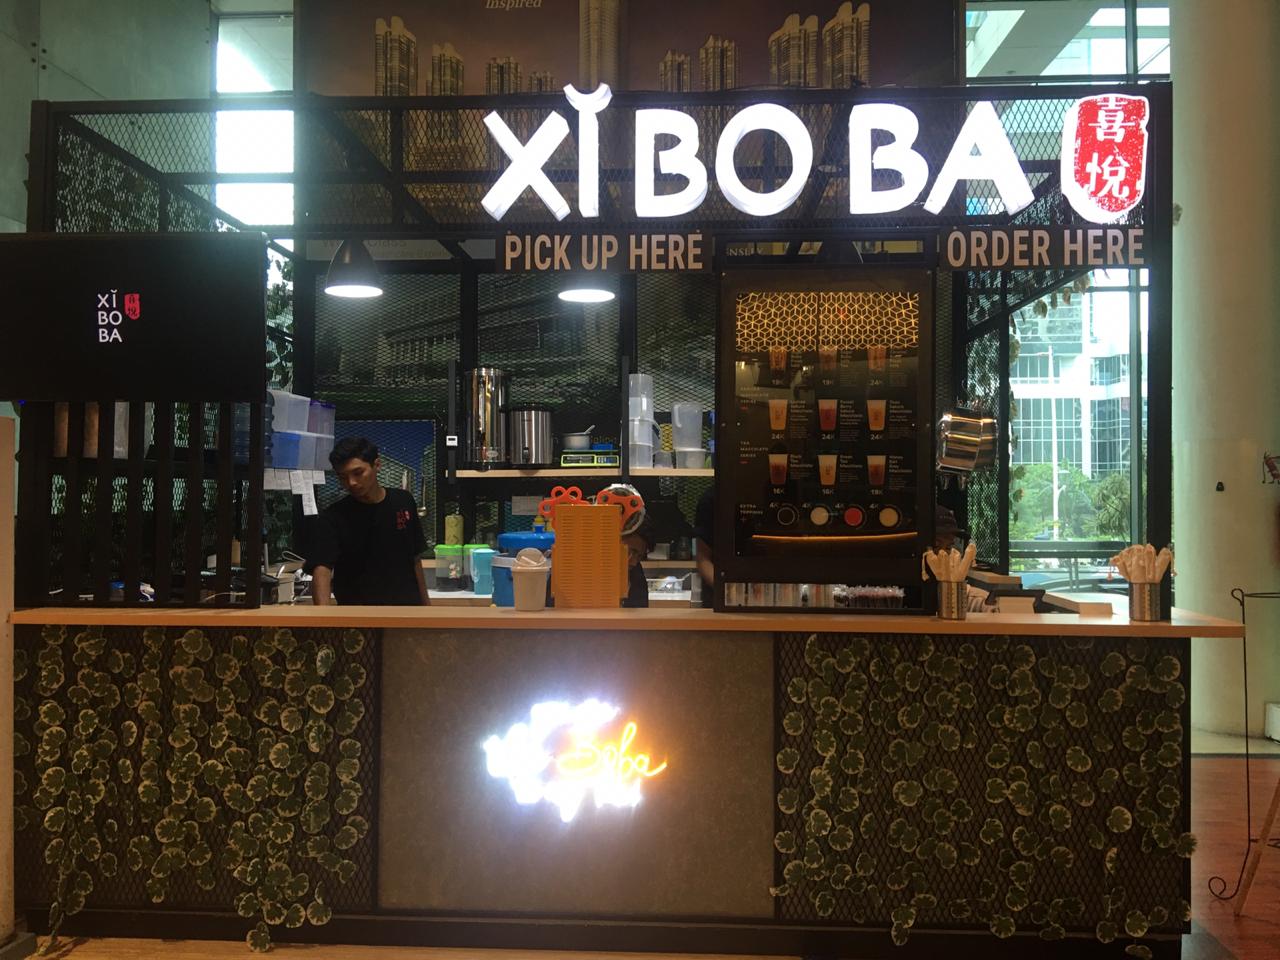 Xiboba shop front in lippo mall puri st. moritz